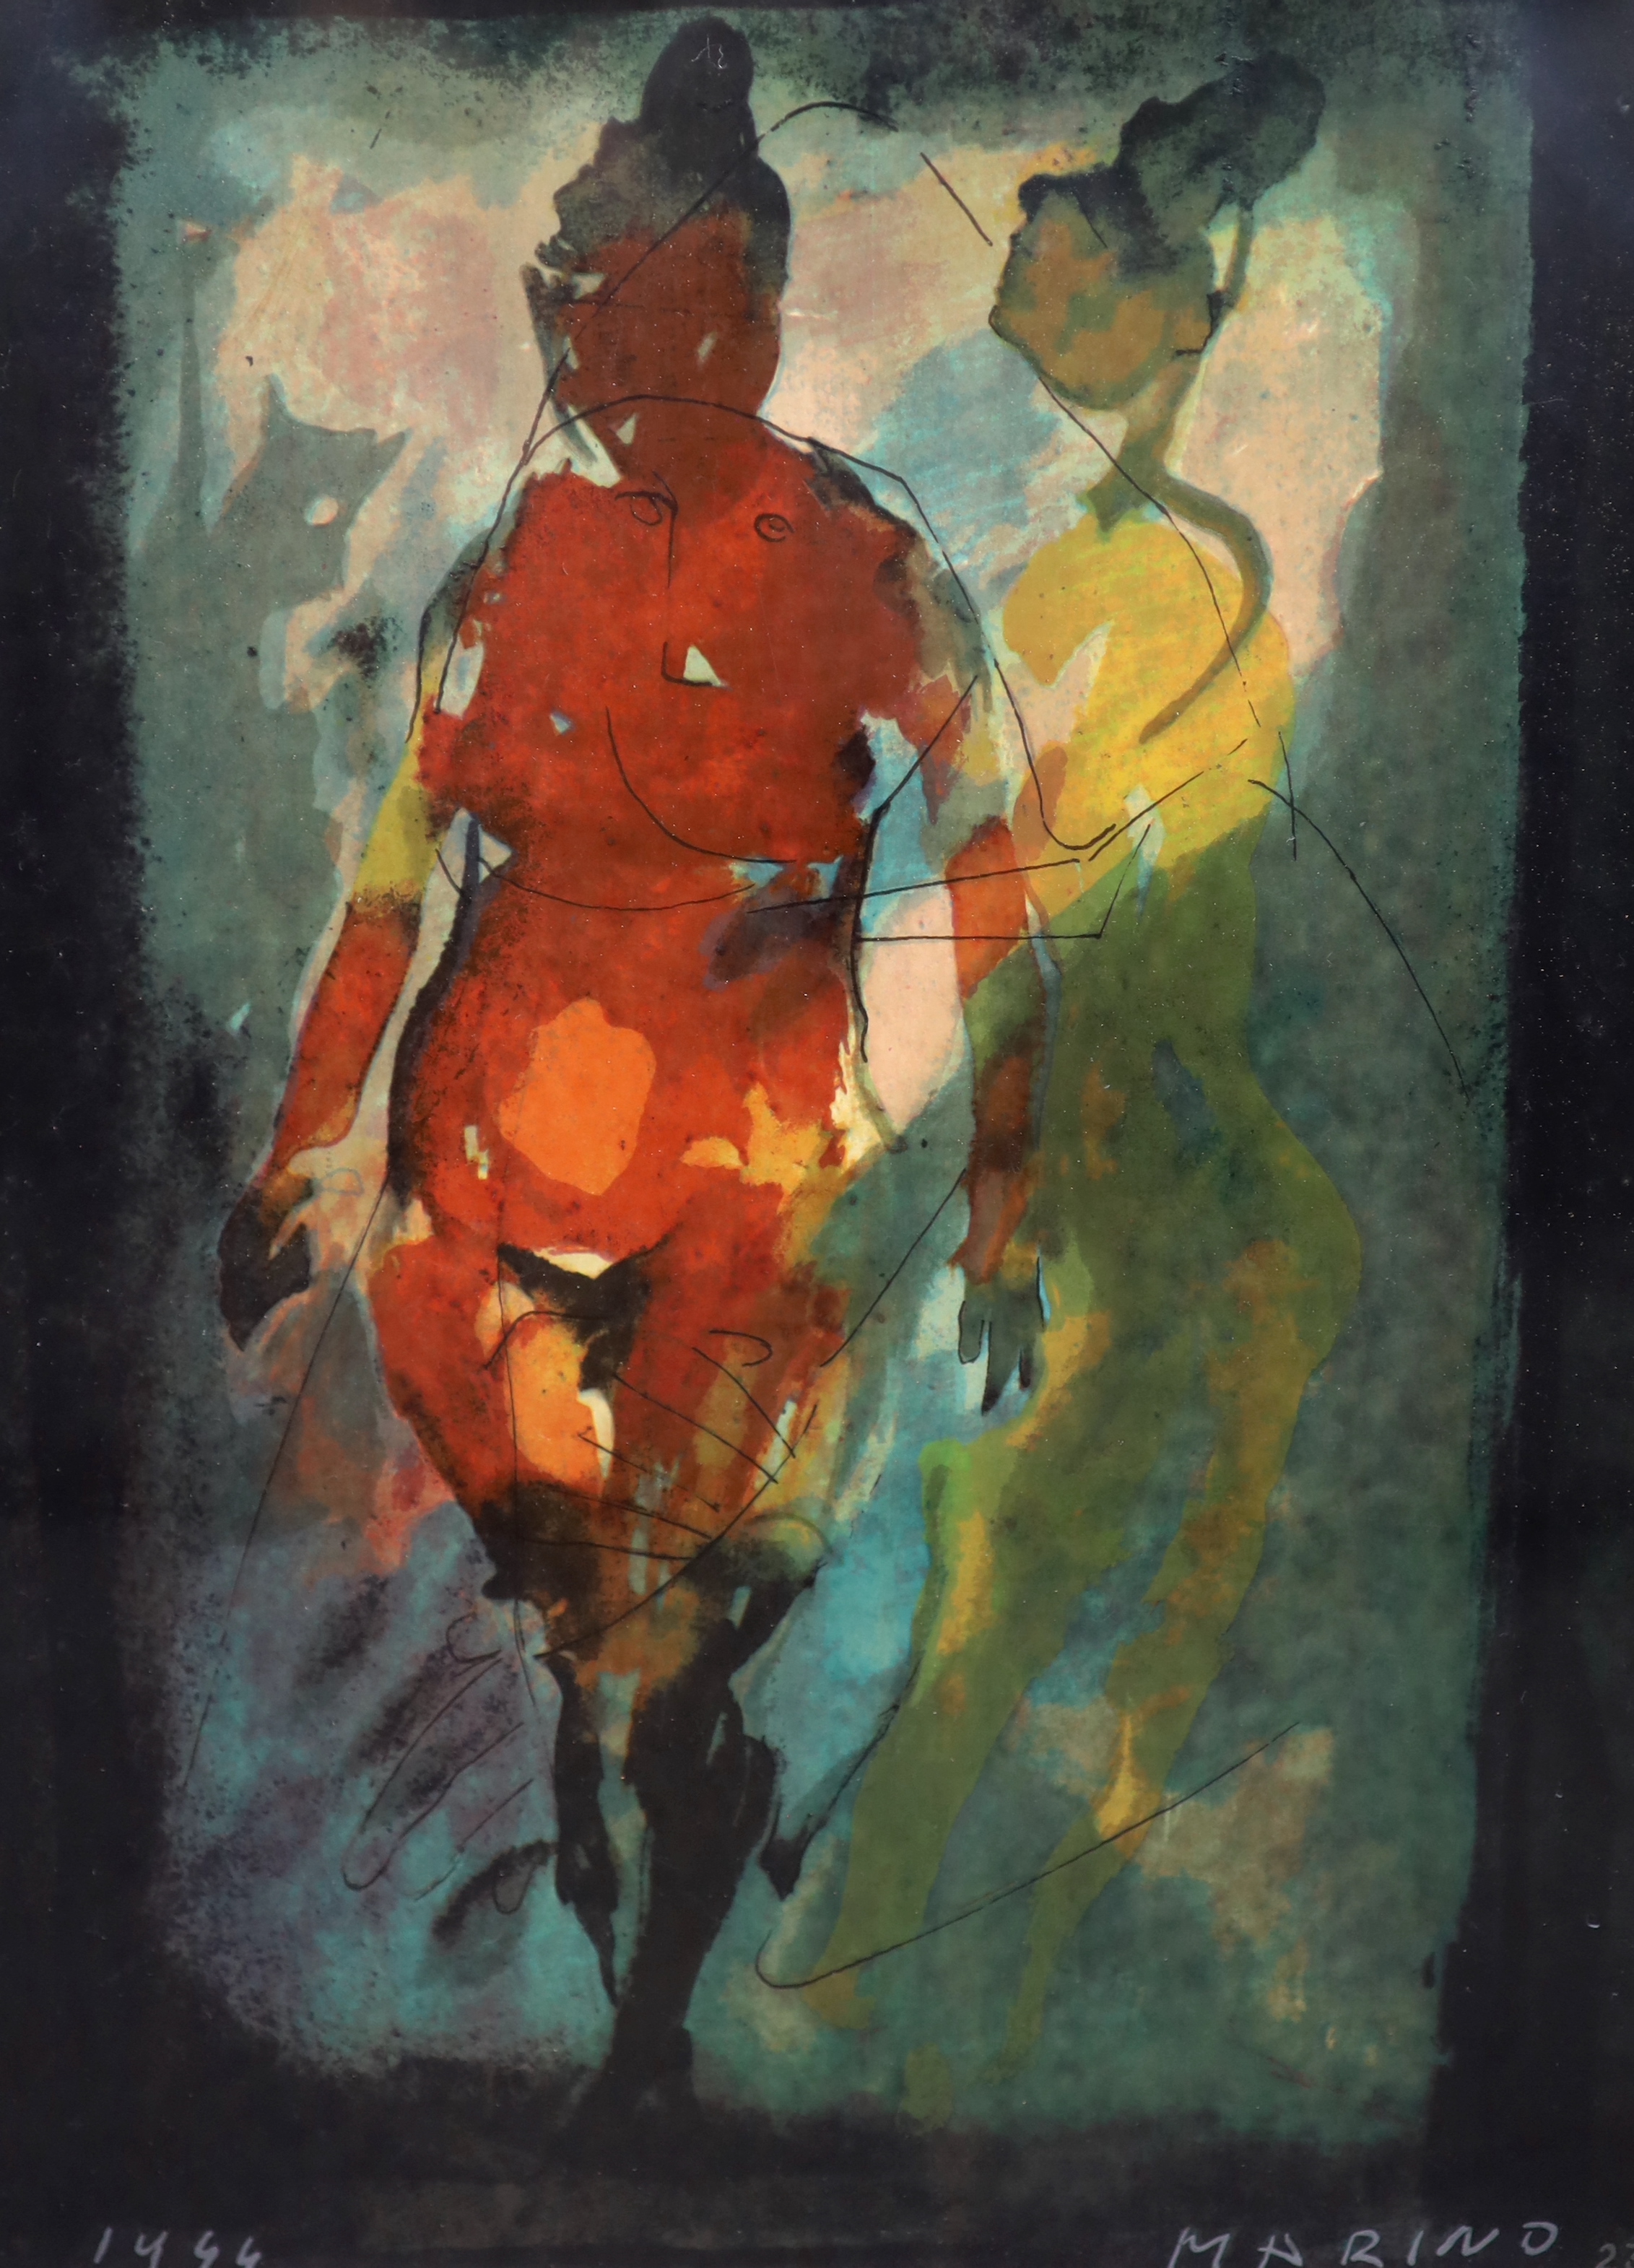 Marino Marini (Italian, 1901-1980), mixed media, Study of two figures, signed, 37 x 27cm